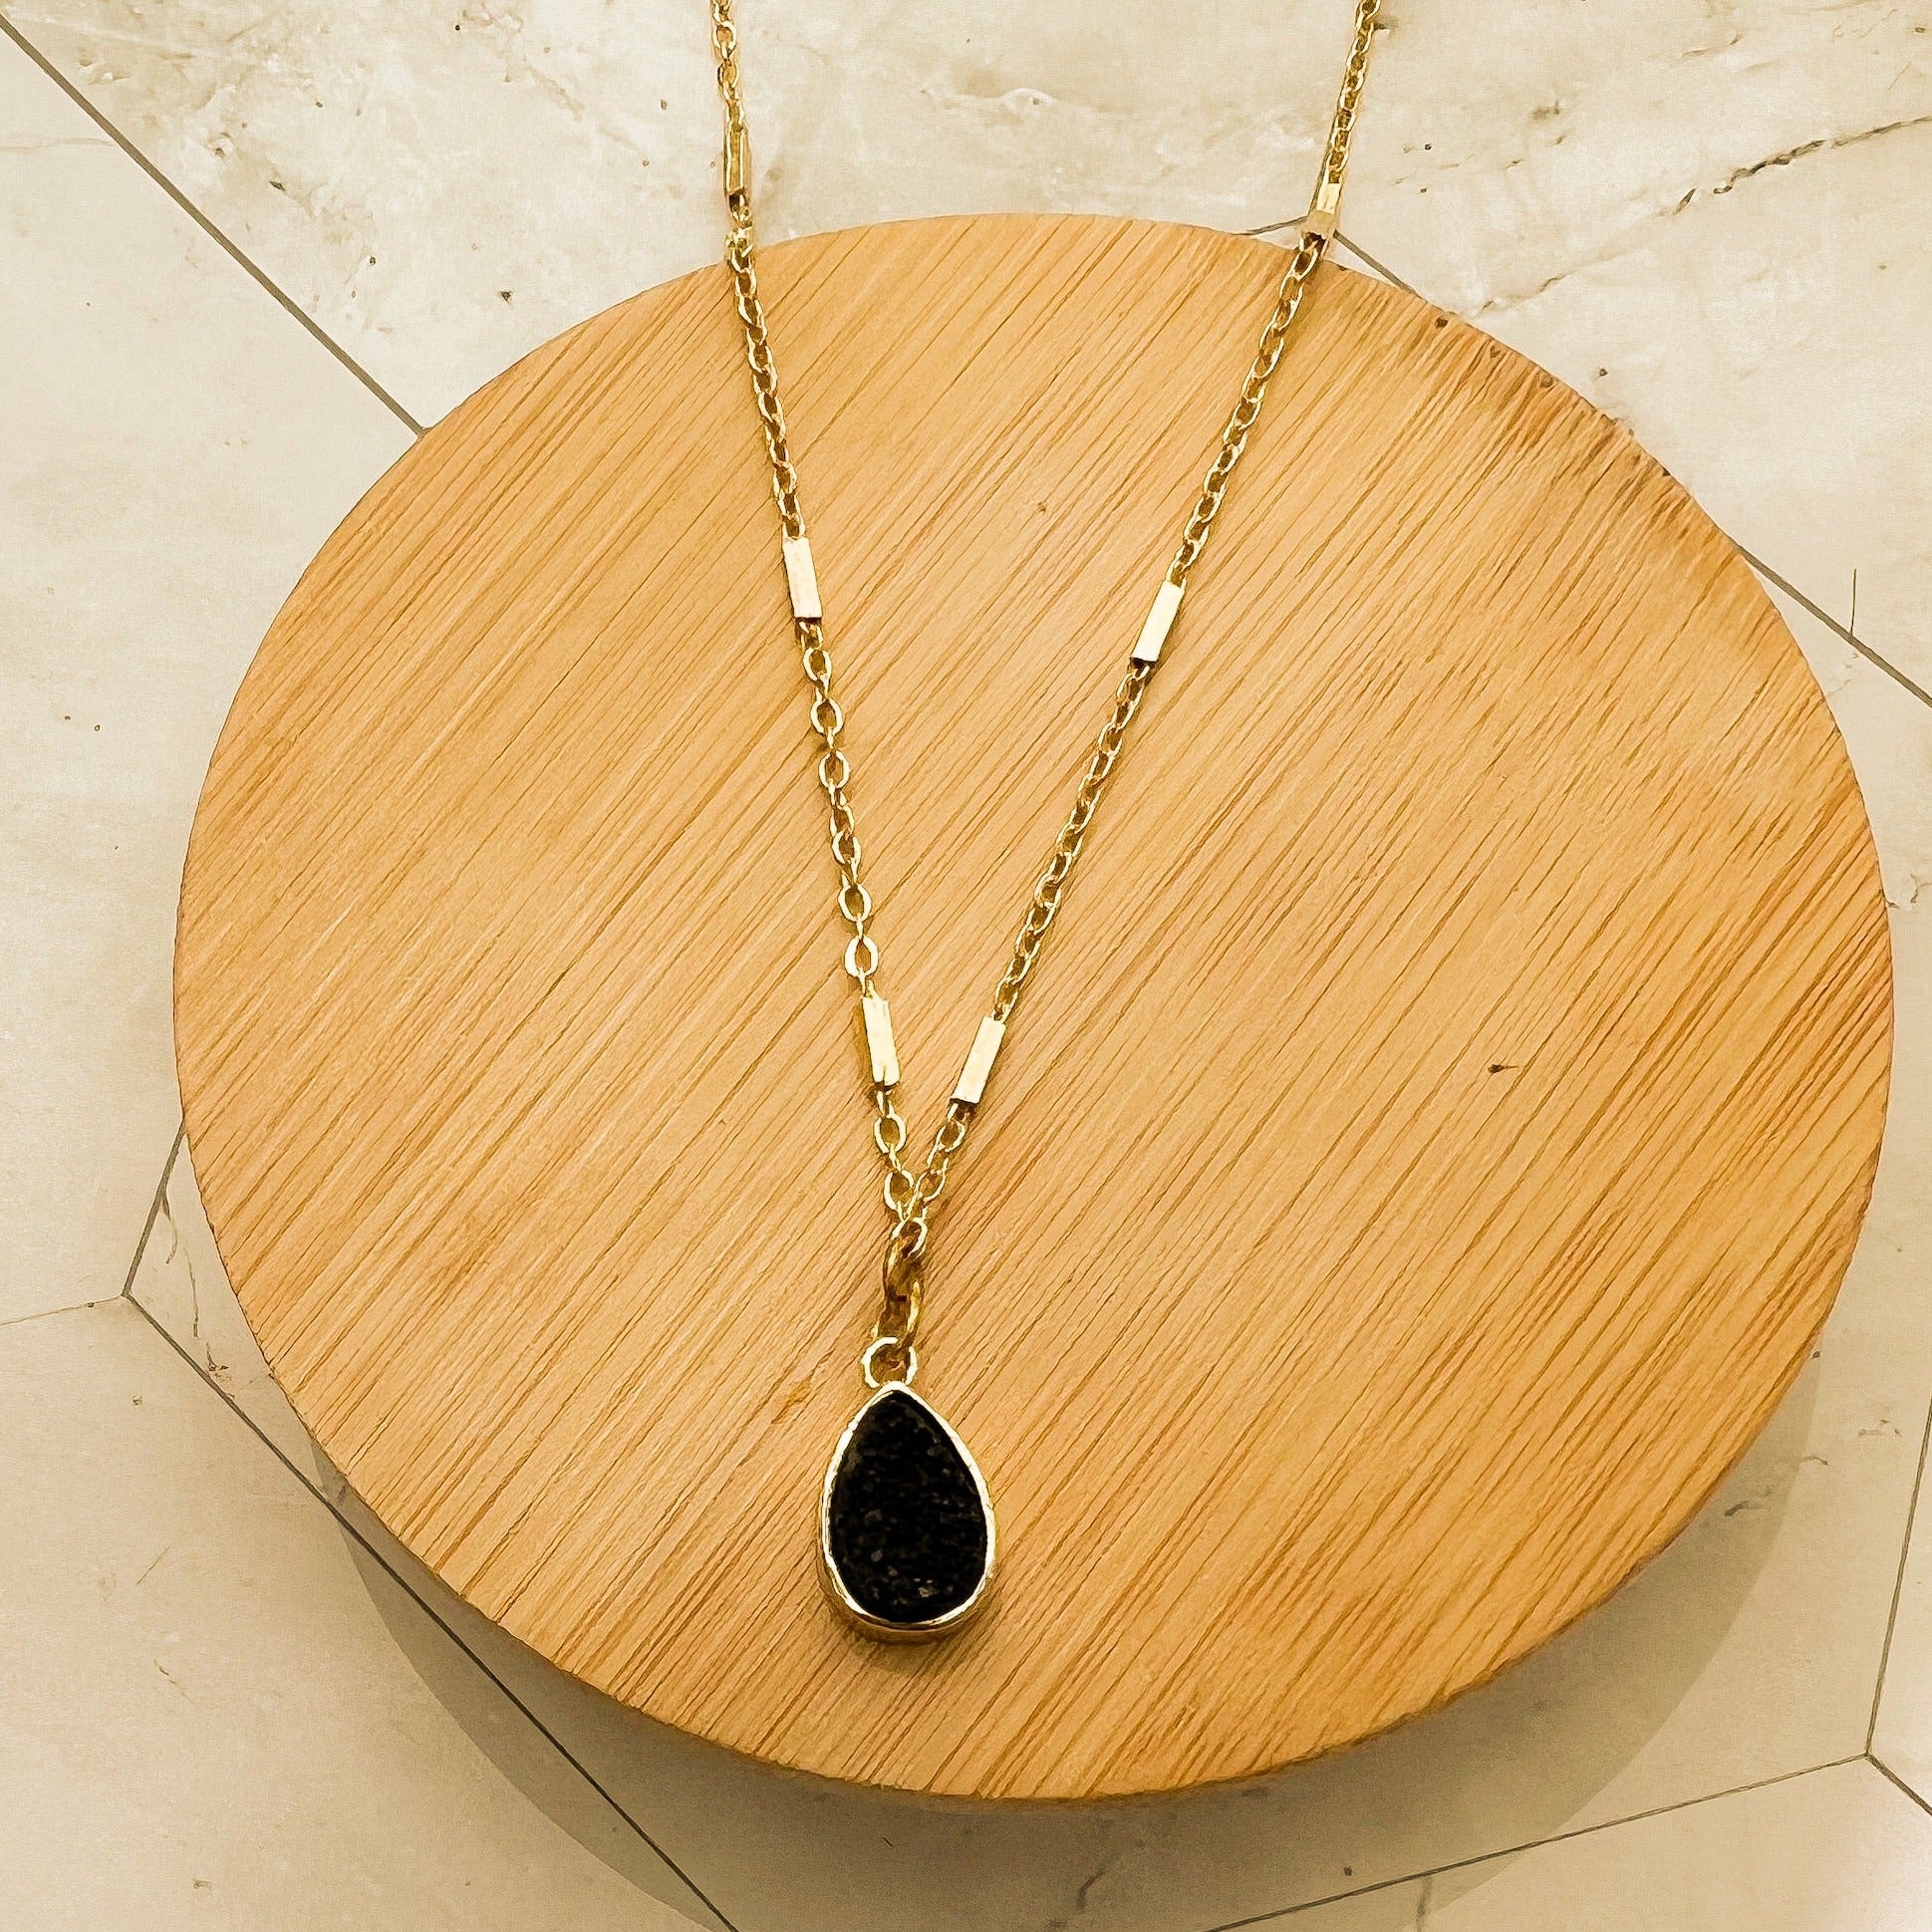 Gemstone Drop Necklace - Lapis, Pyrite, or Black Druzy